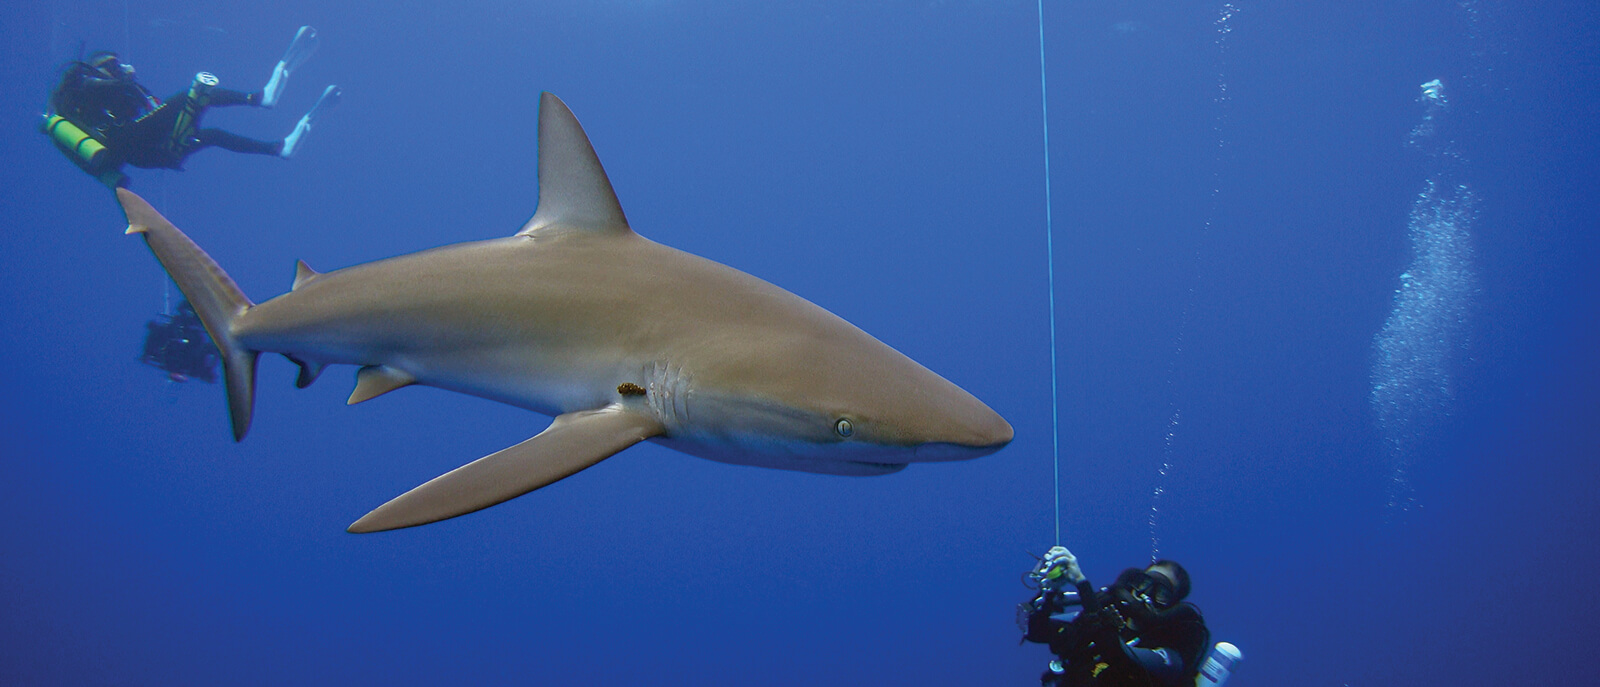 a shark swims near divers